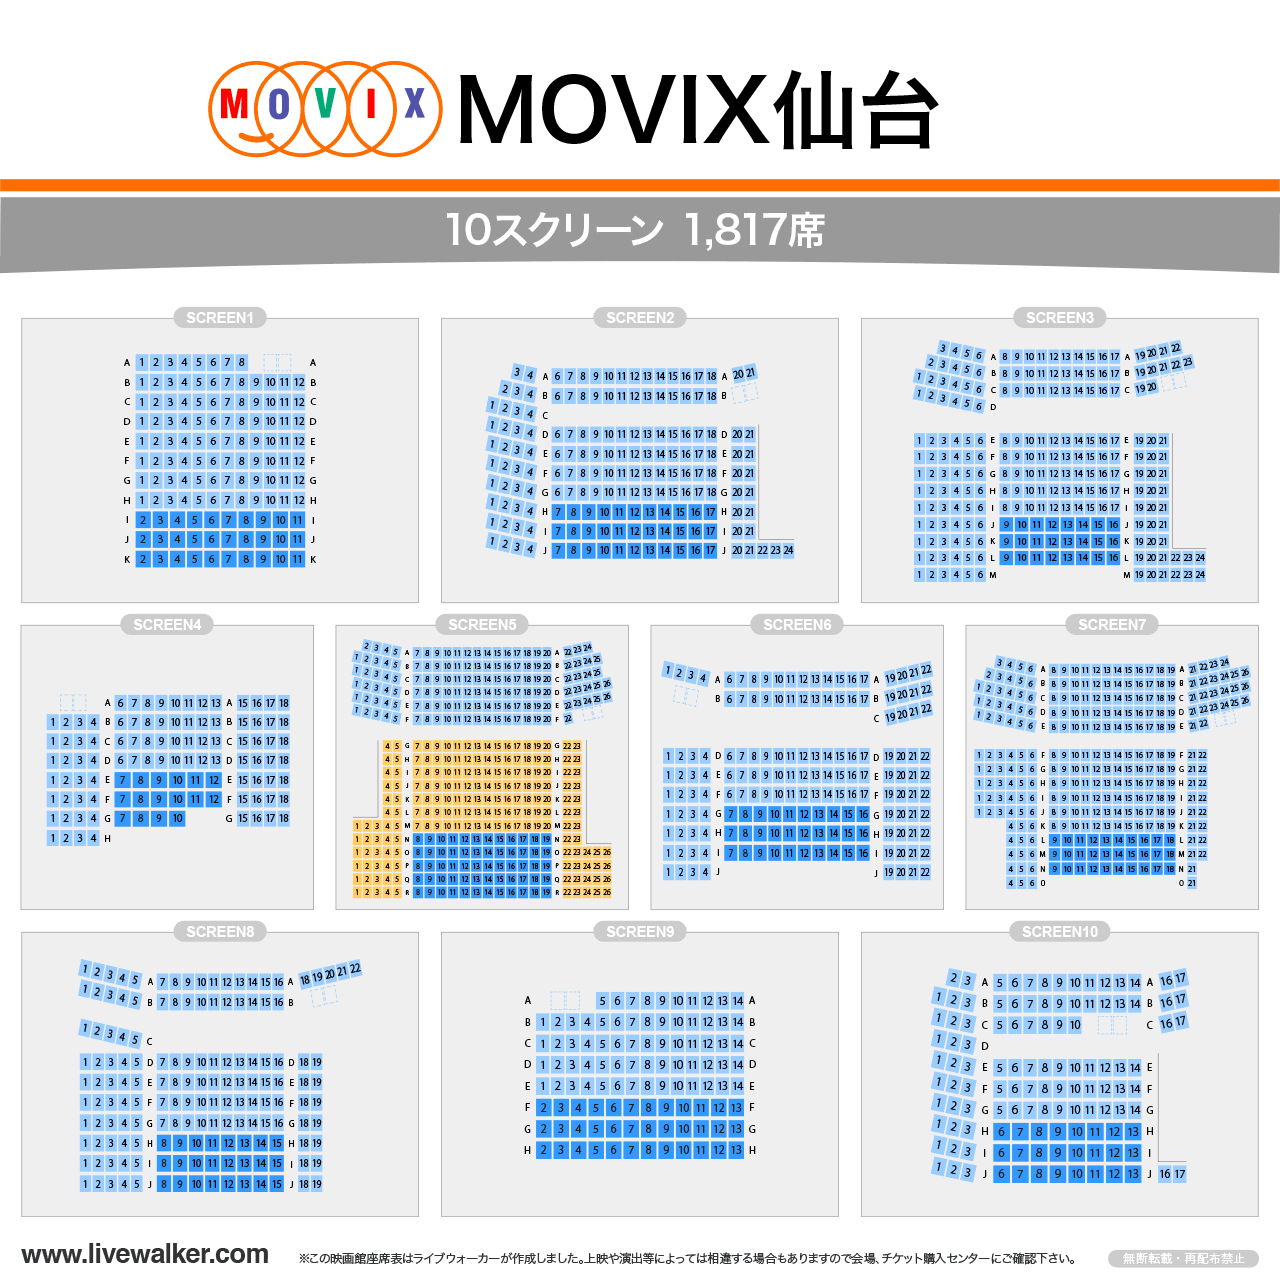 MOVIX仙台シアターの座席表